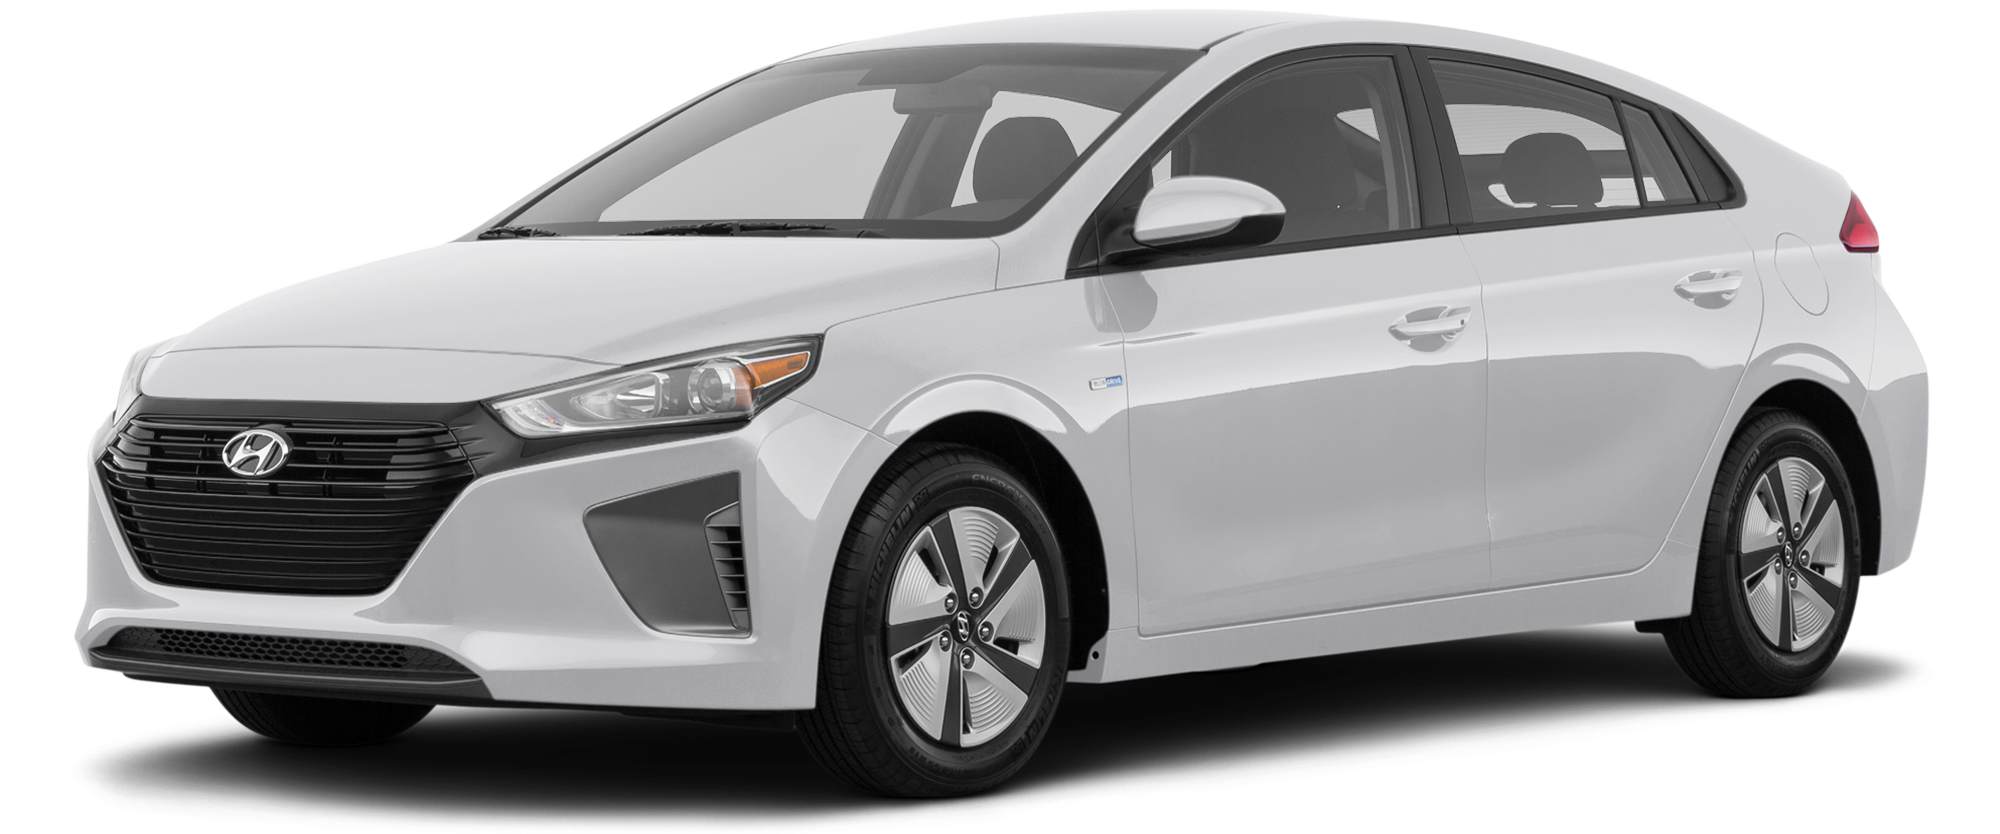 2019 Hyundai Ioniq Hybrid Incentives, Specials & Offers in Vestal NY